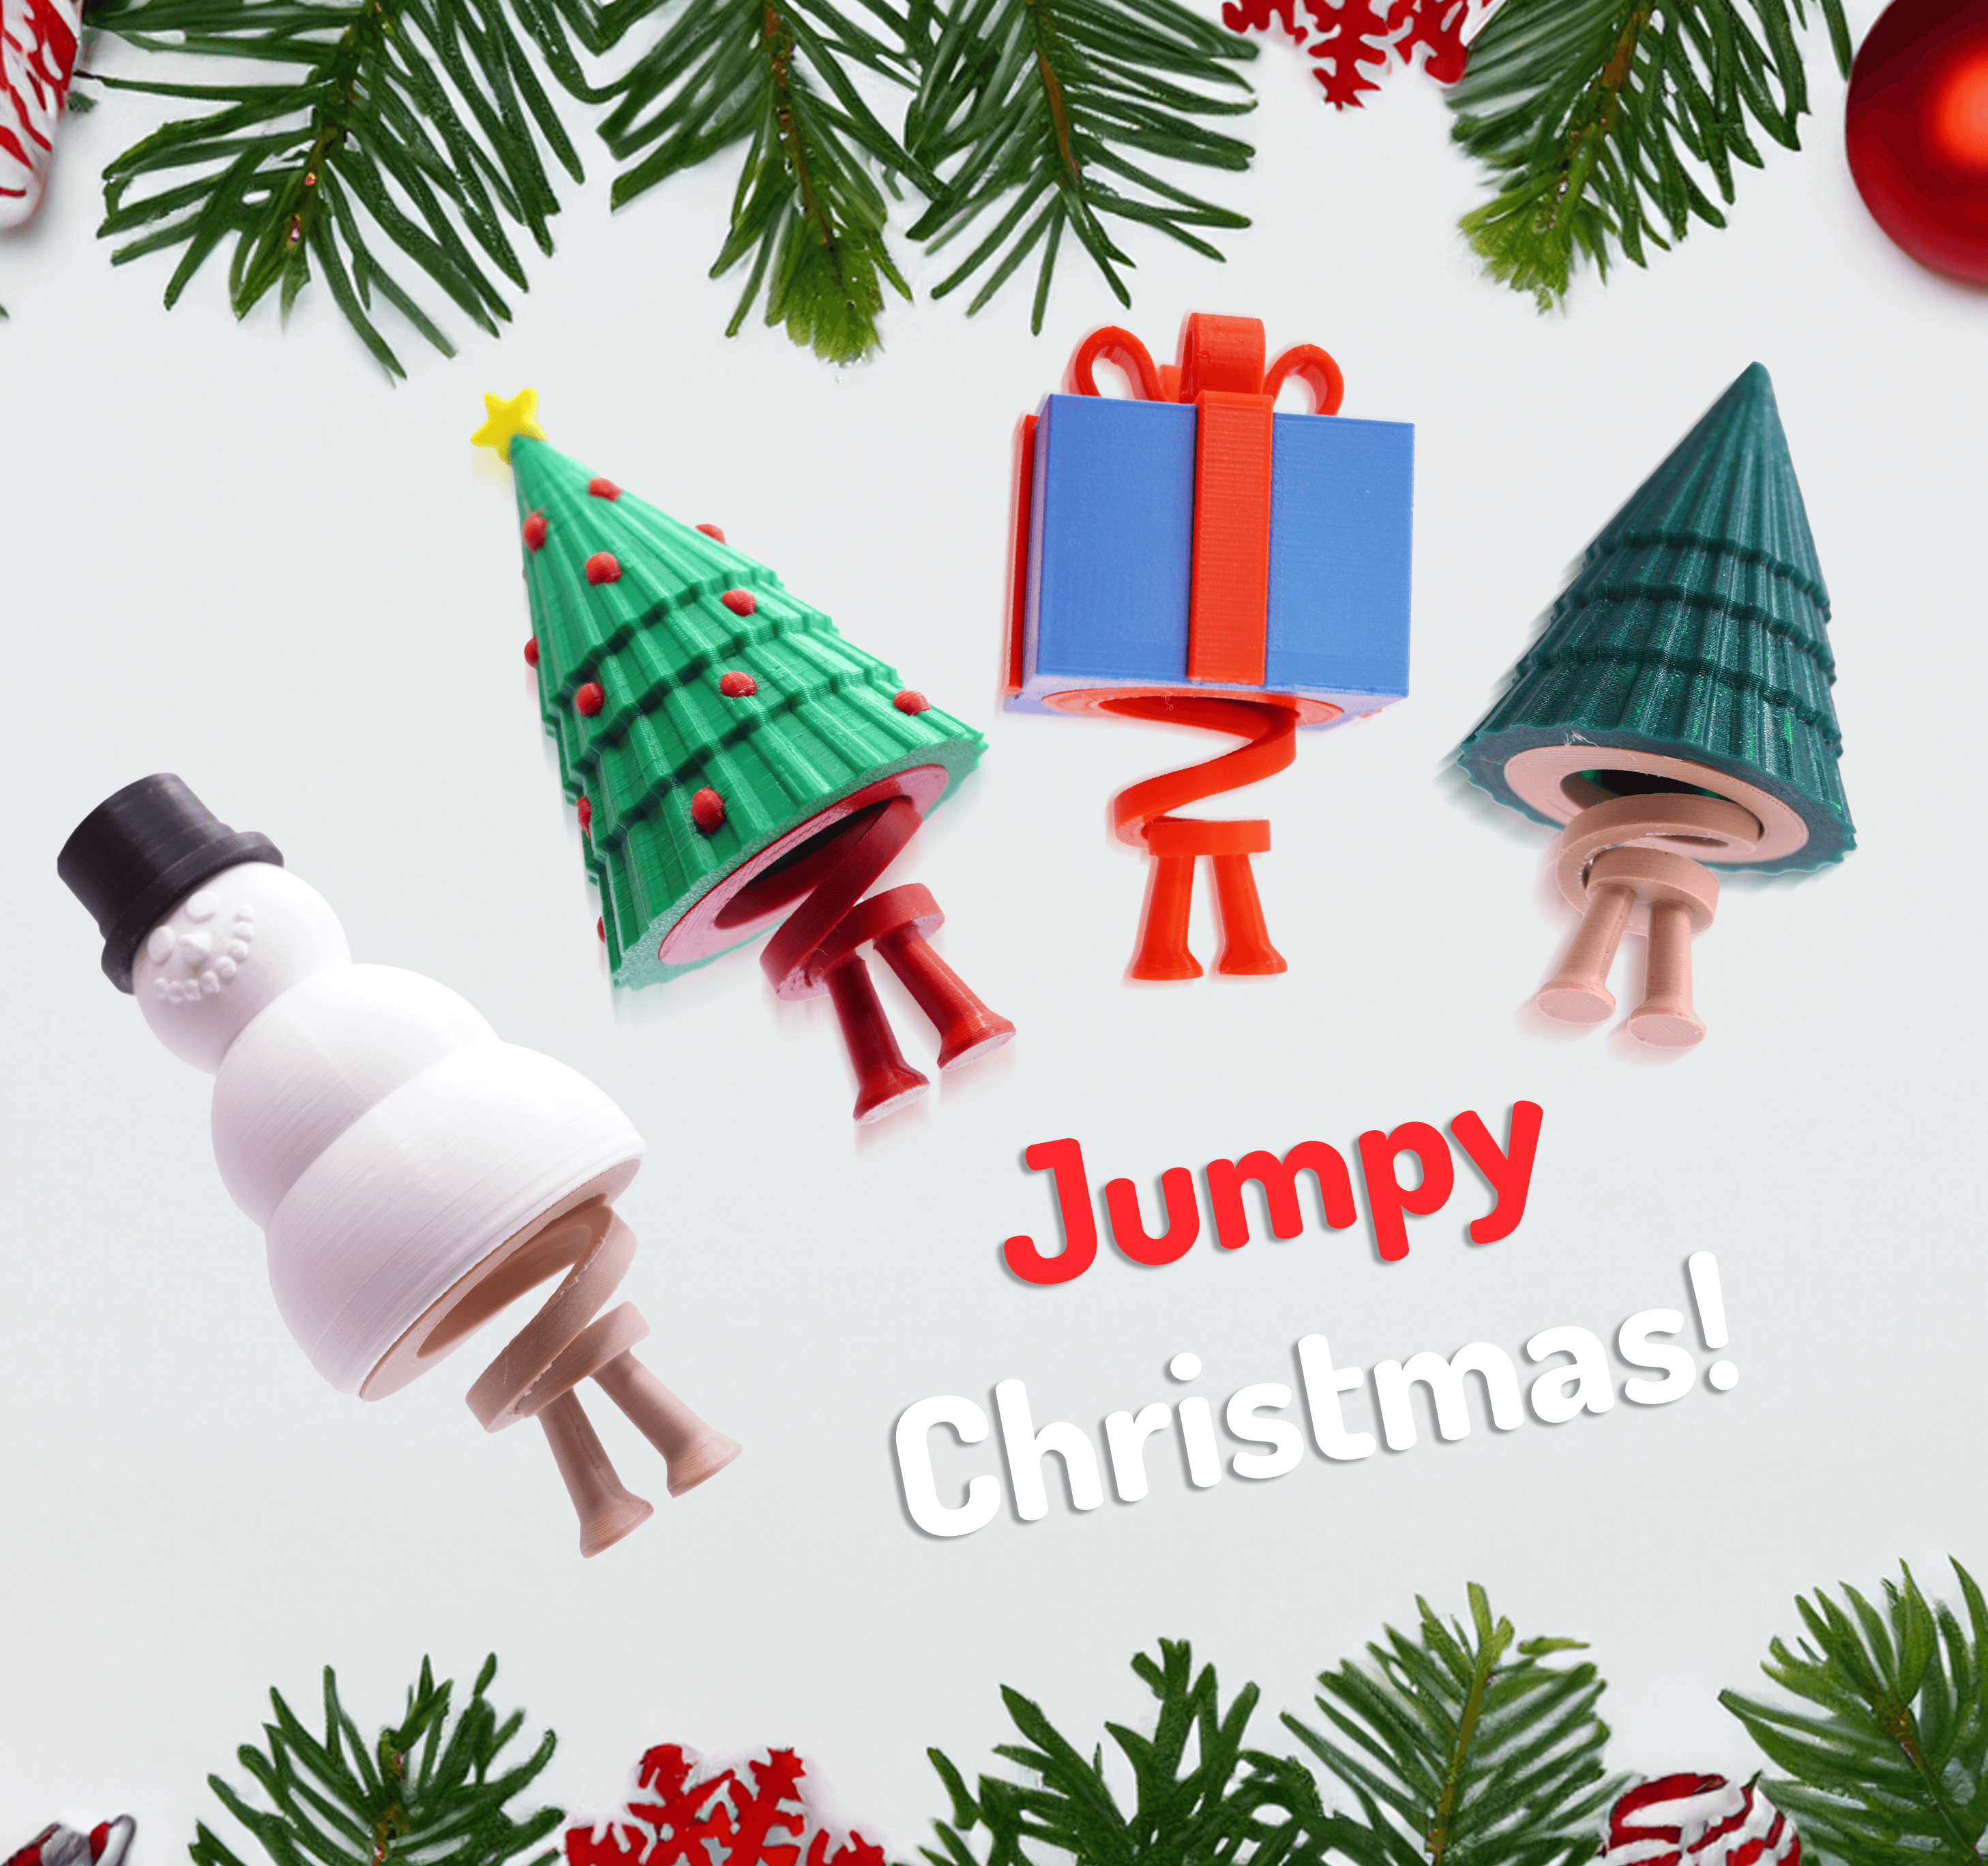 Left to right Jumpy Snowman, christmas tree, present, tree